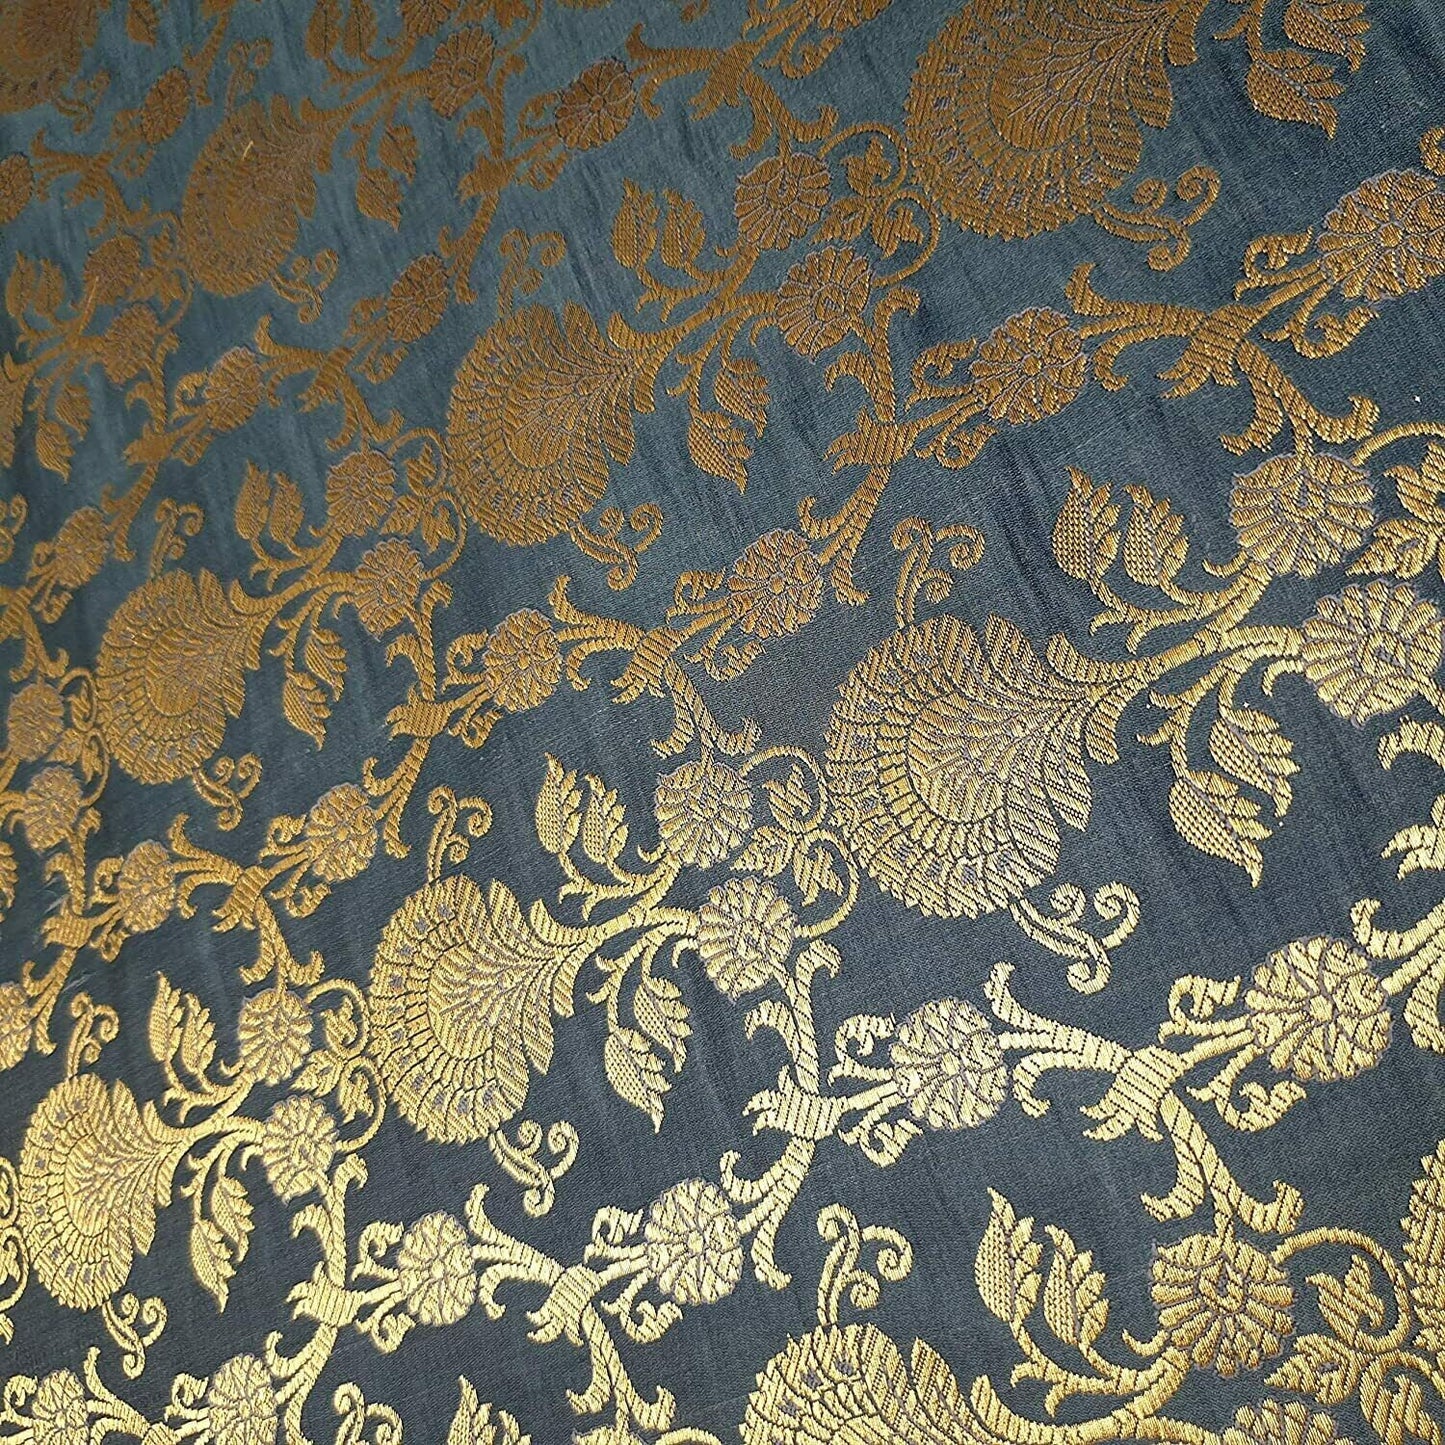 New Prints Ornamental Floral Gold Metallic Print Indian Banarasi Brocade Fabric (Marl Grey)